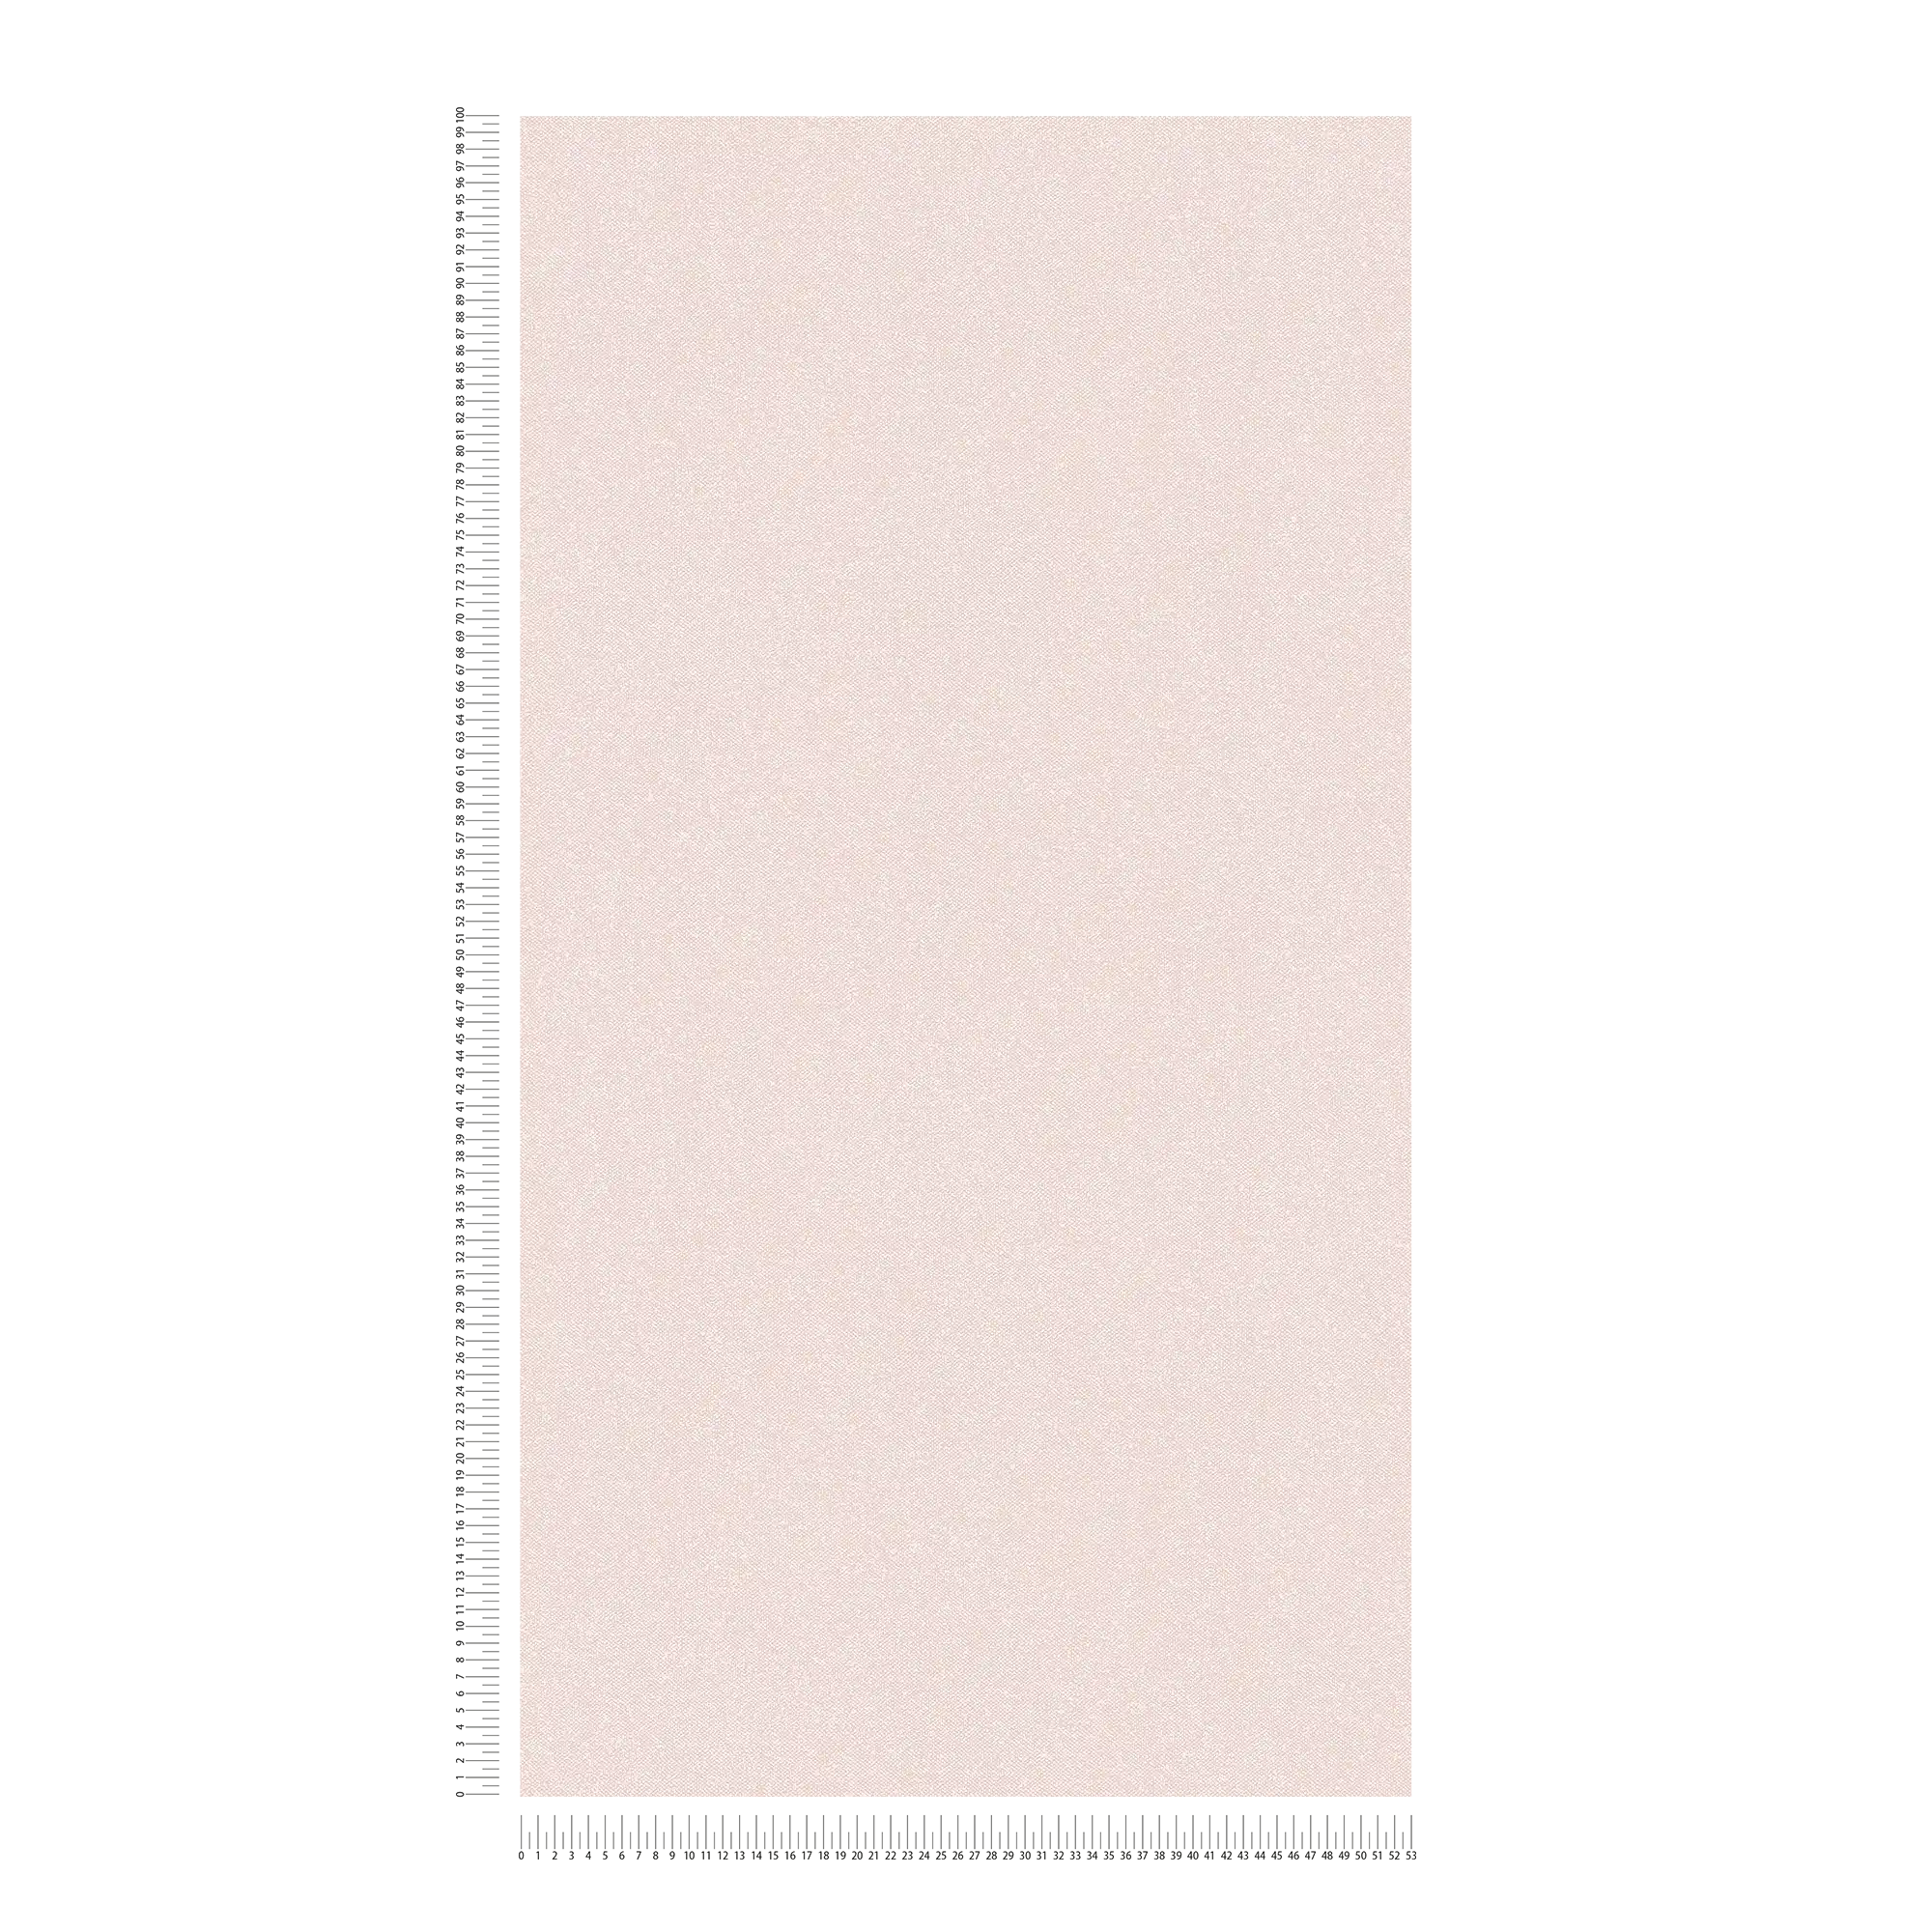             Textile optics wallpaper plain - pink, cream, white
        